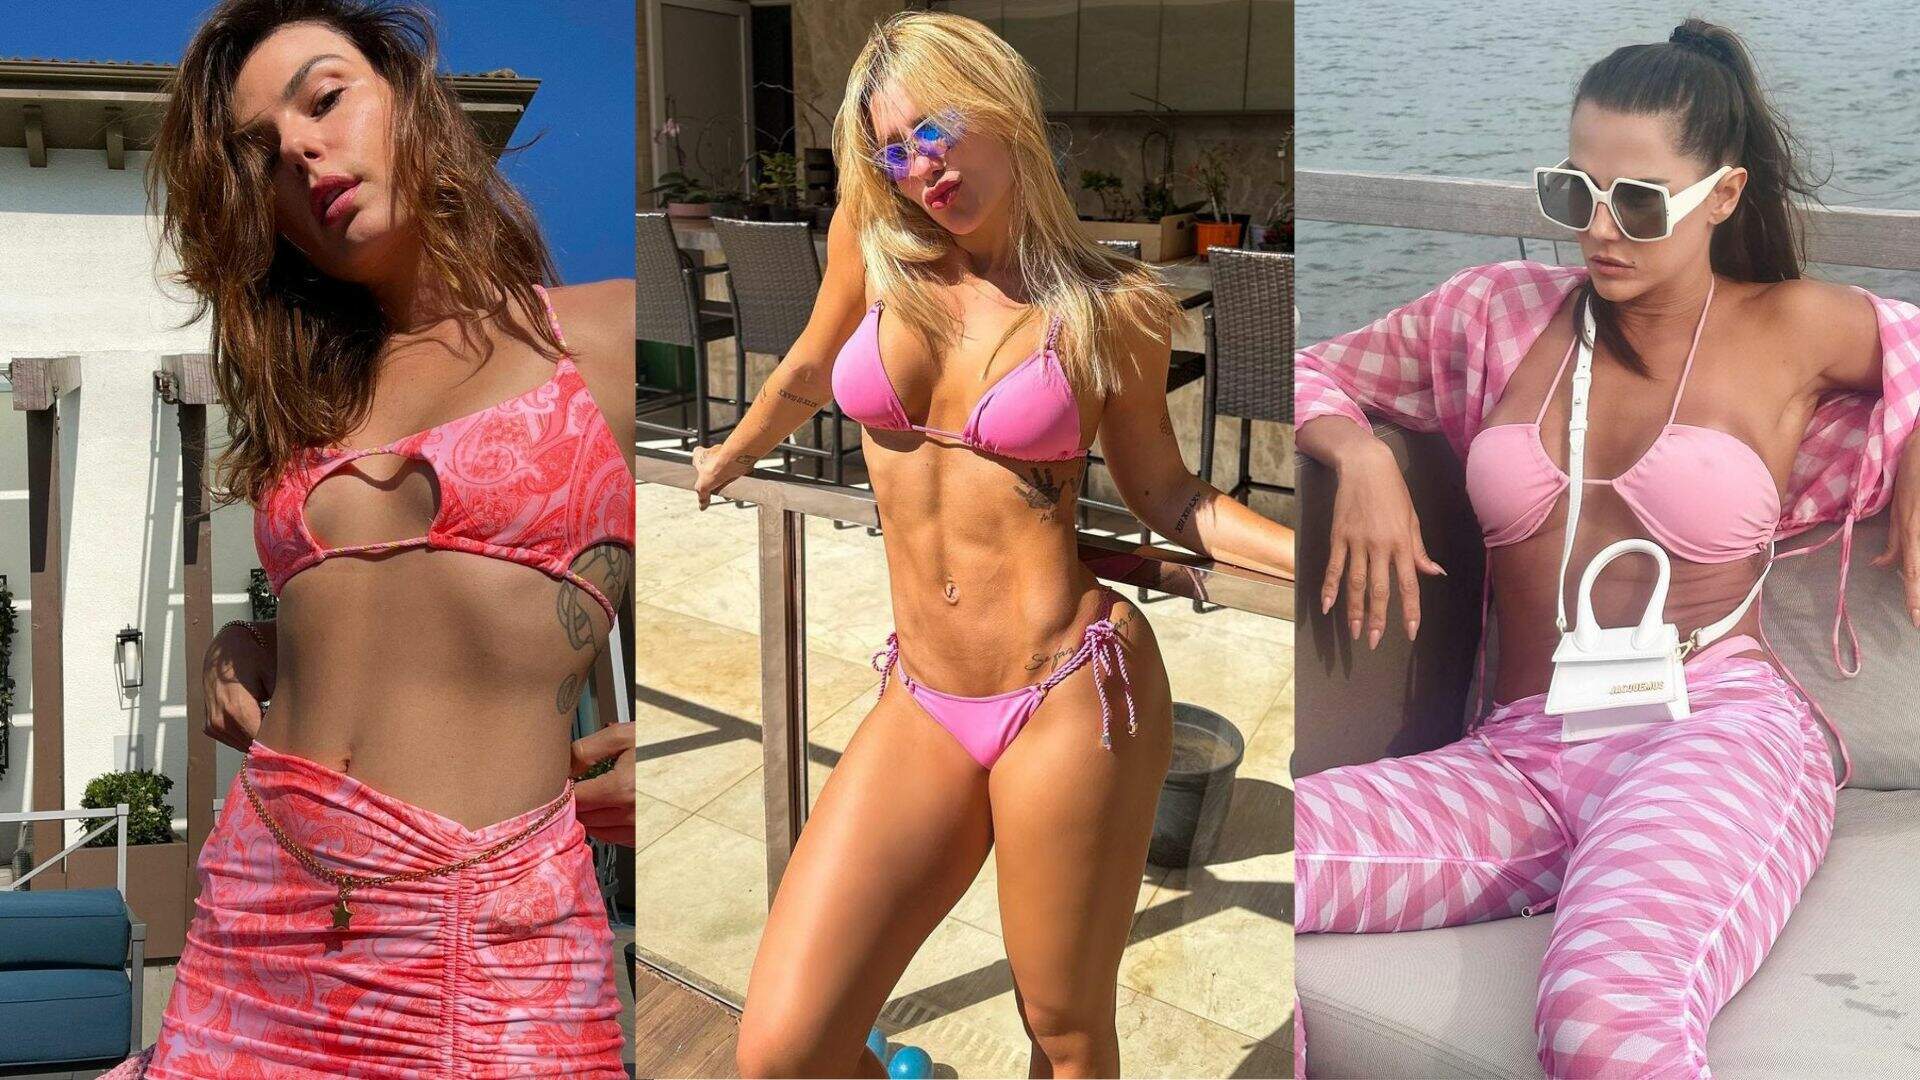 Barbiecore na moda praia: biquíni rosa vira tendência entre celebridades; inspire-se nos looks - Metropolitana FM